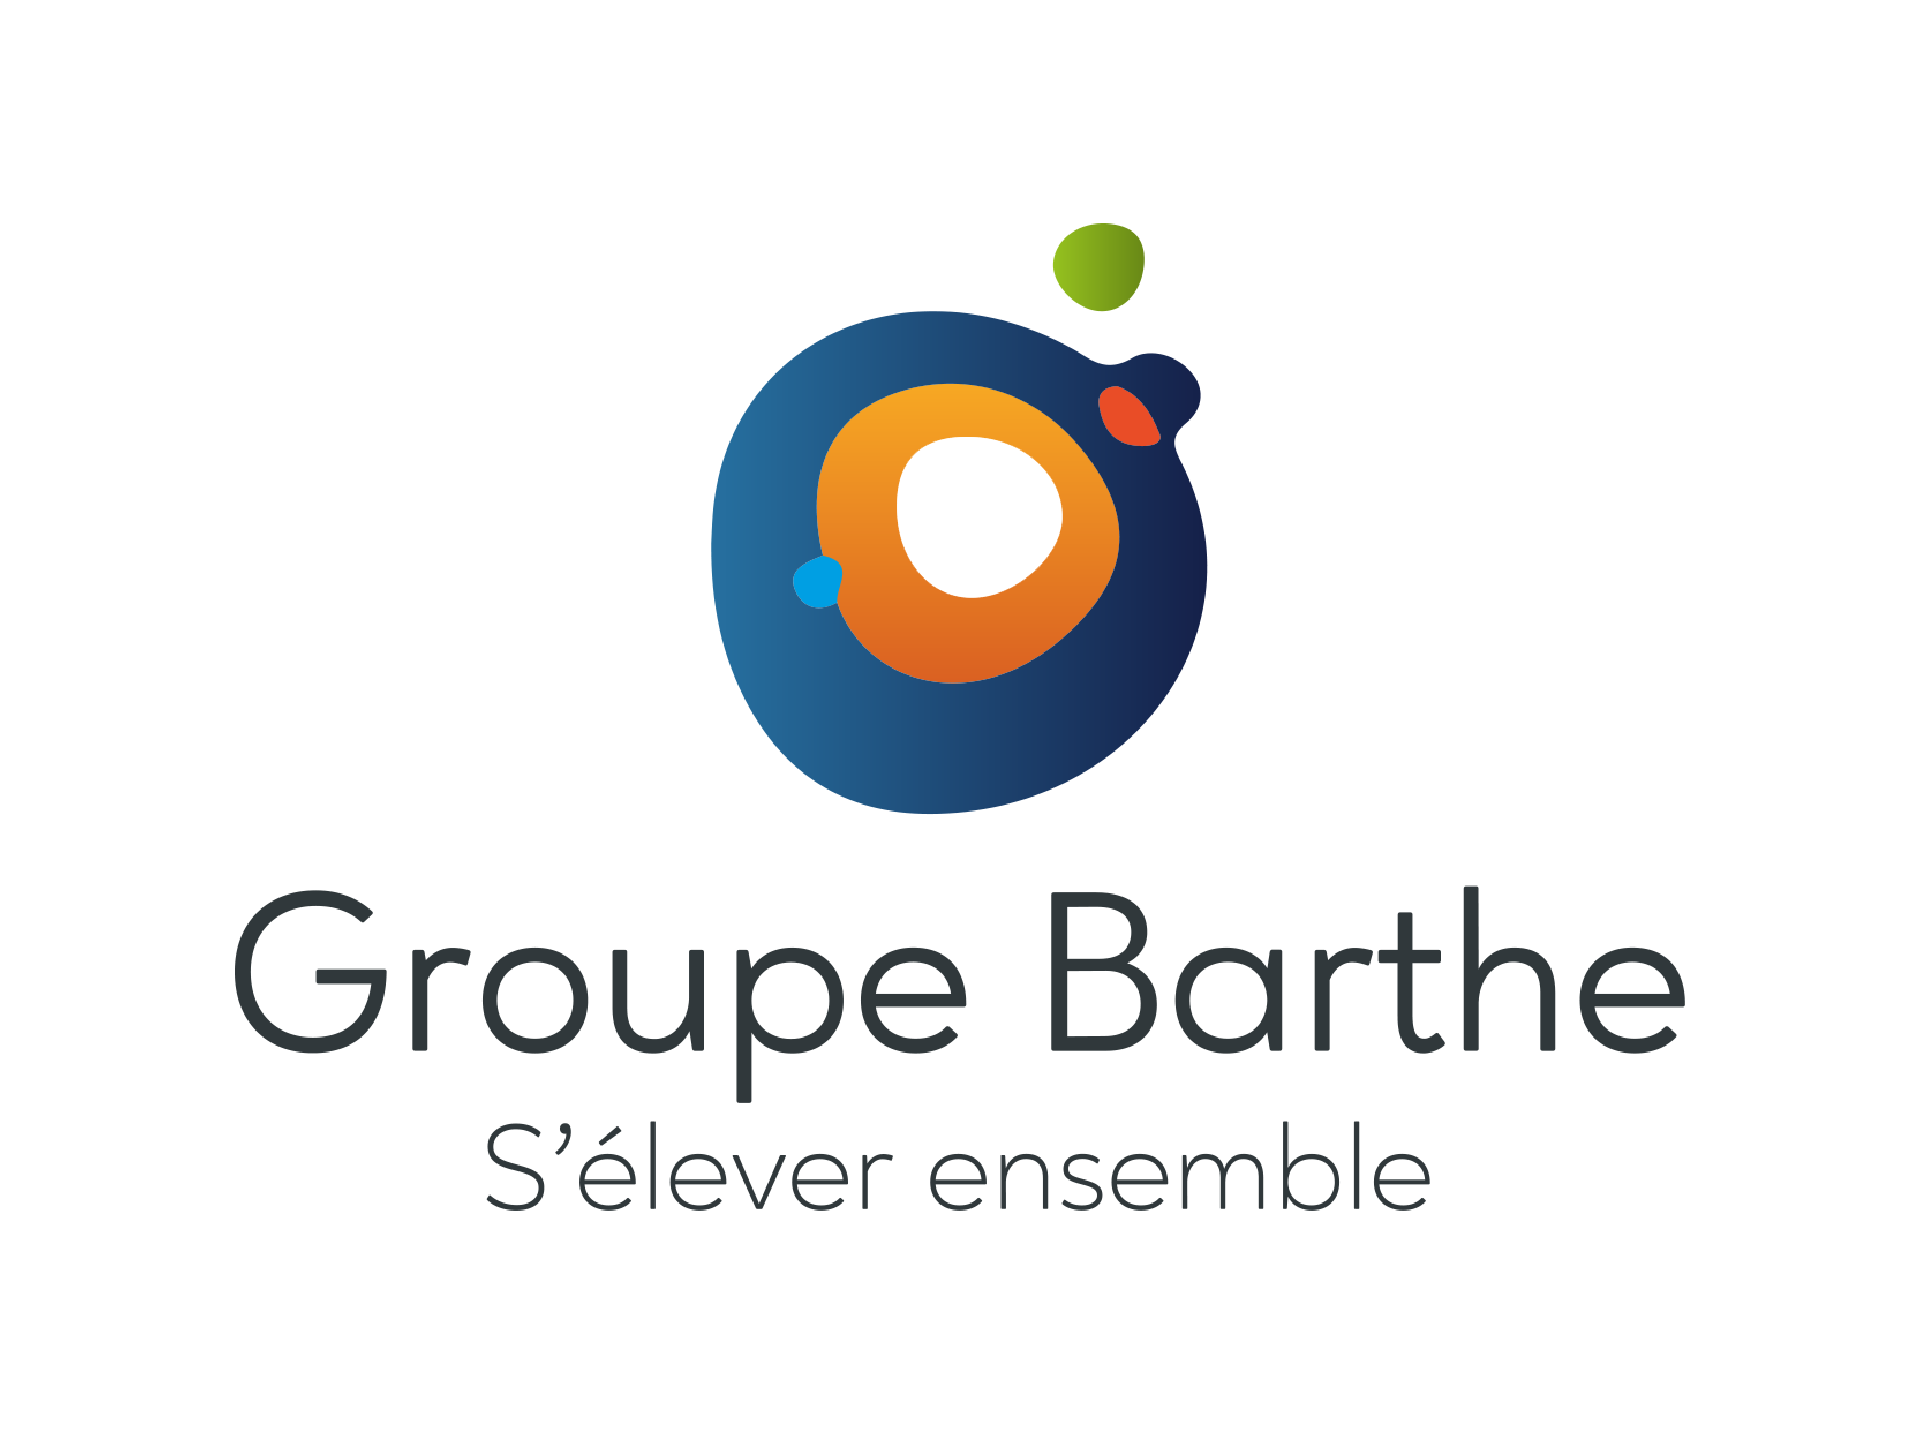 Group Barthe